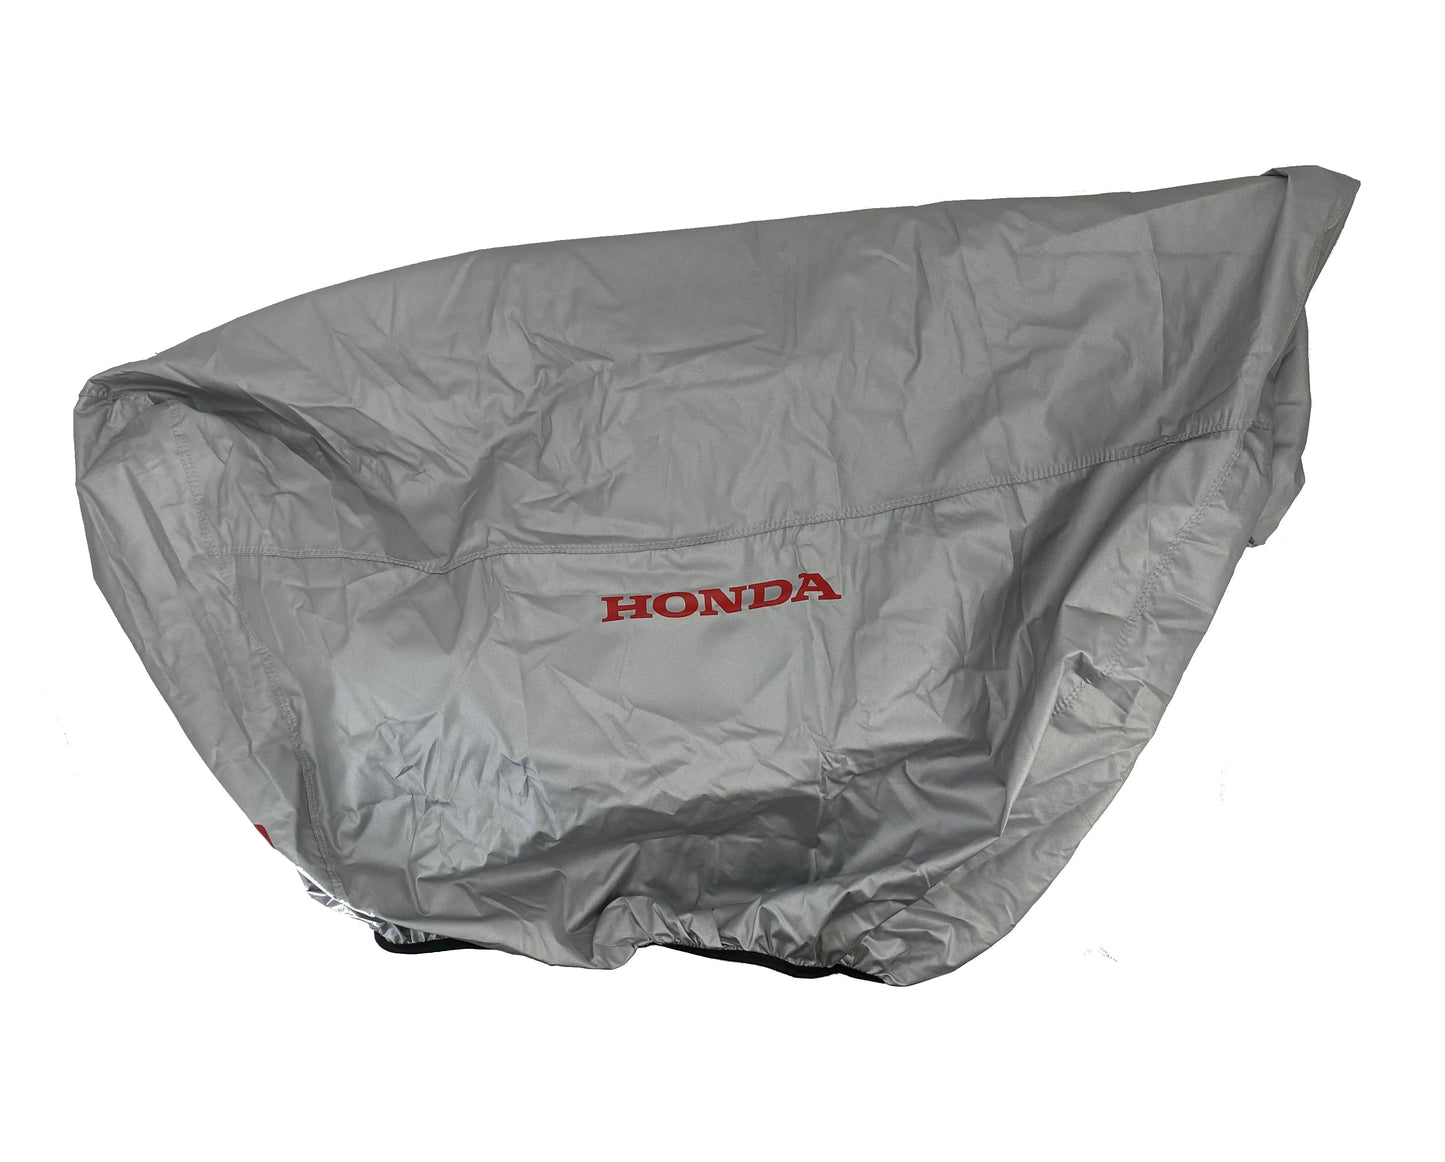 Honda Original Equipment HS520 Snow Blower Cover - 06520-768-000AH